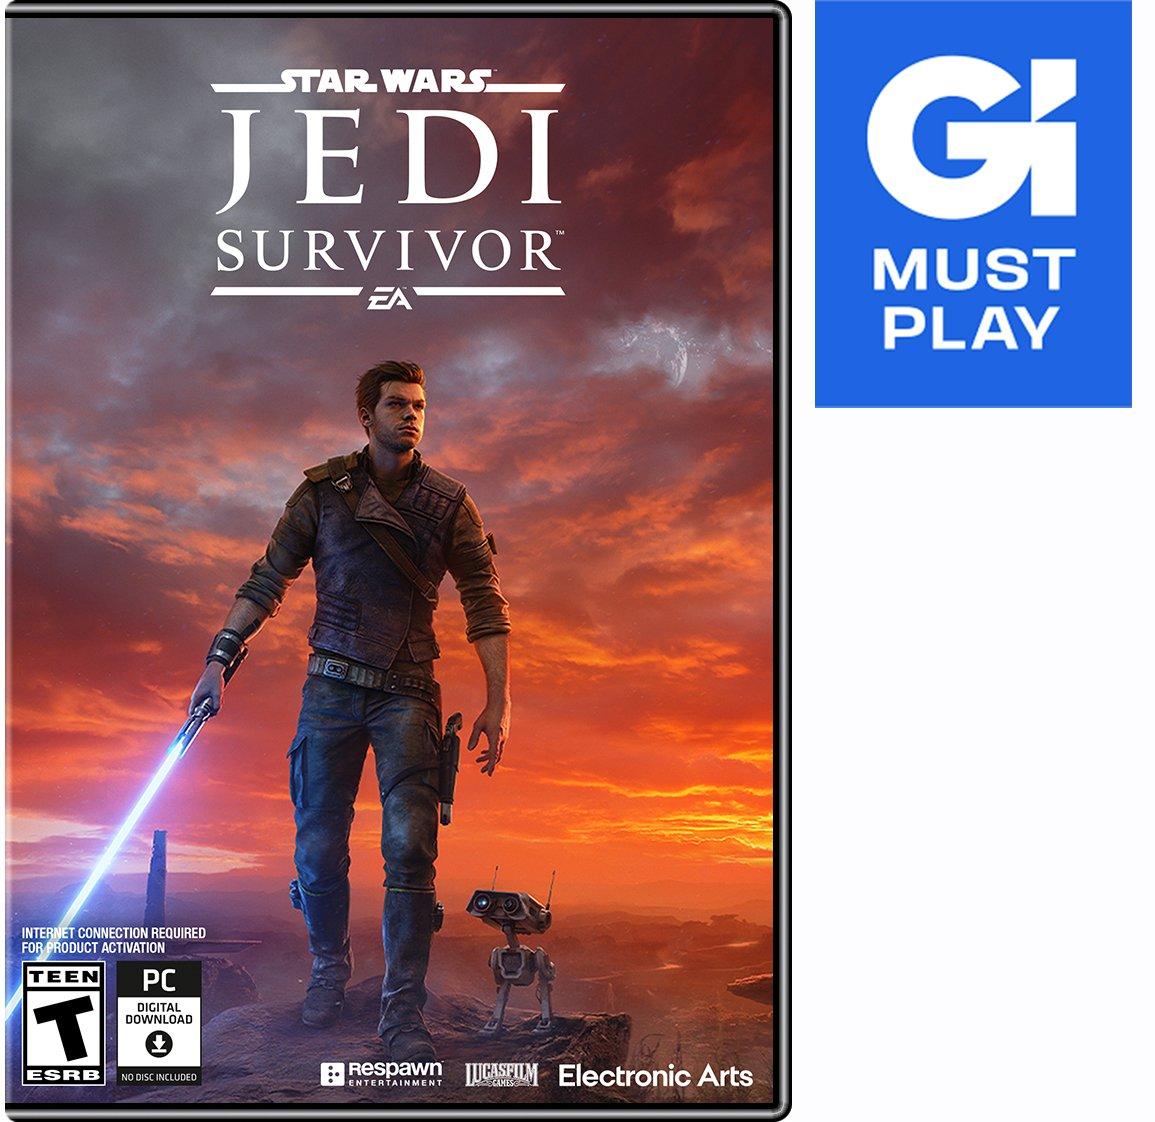 NV99, Veja os requisitos de hardware de Star Wars Jedi Survivor no PC, Flow Games